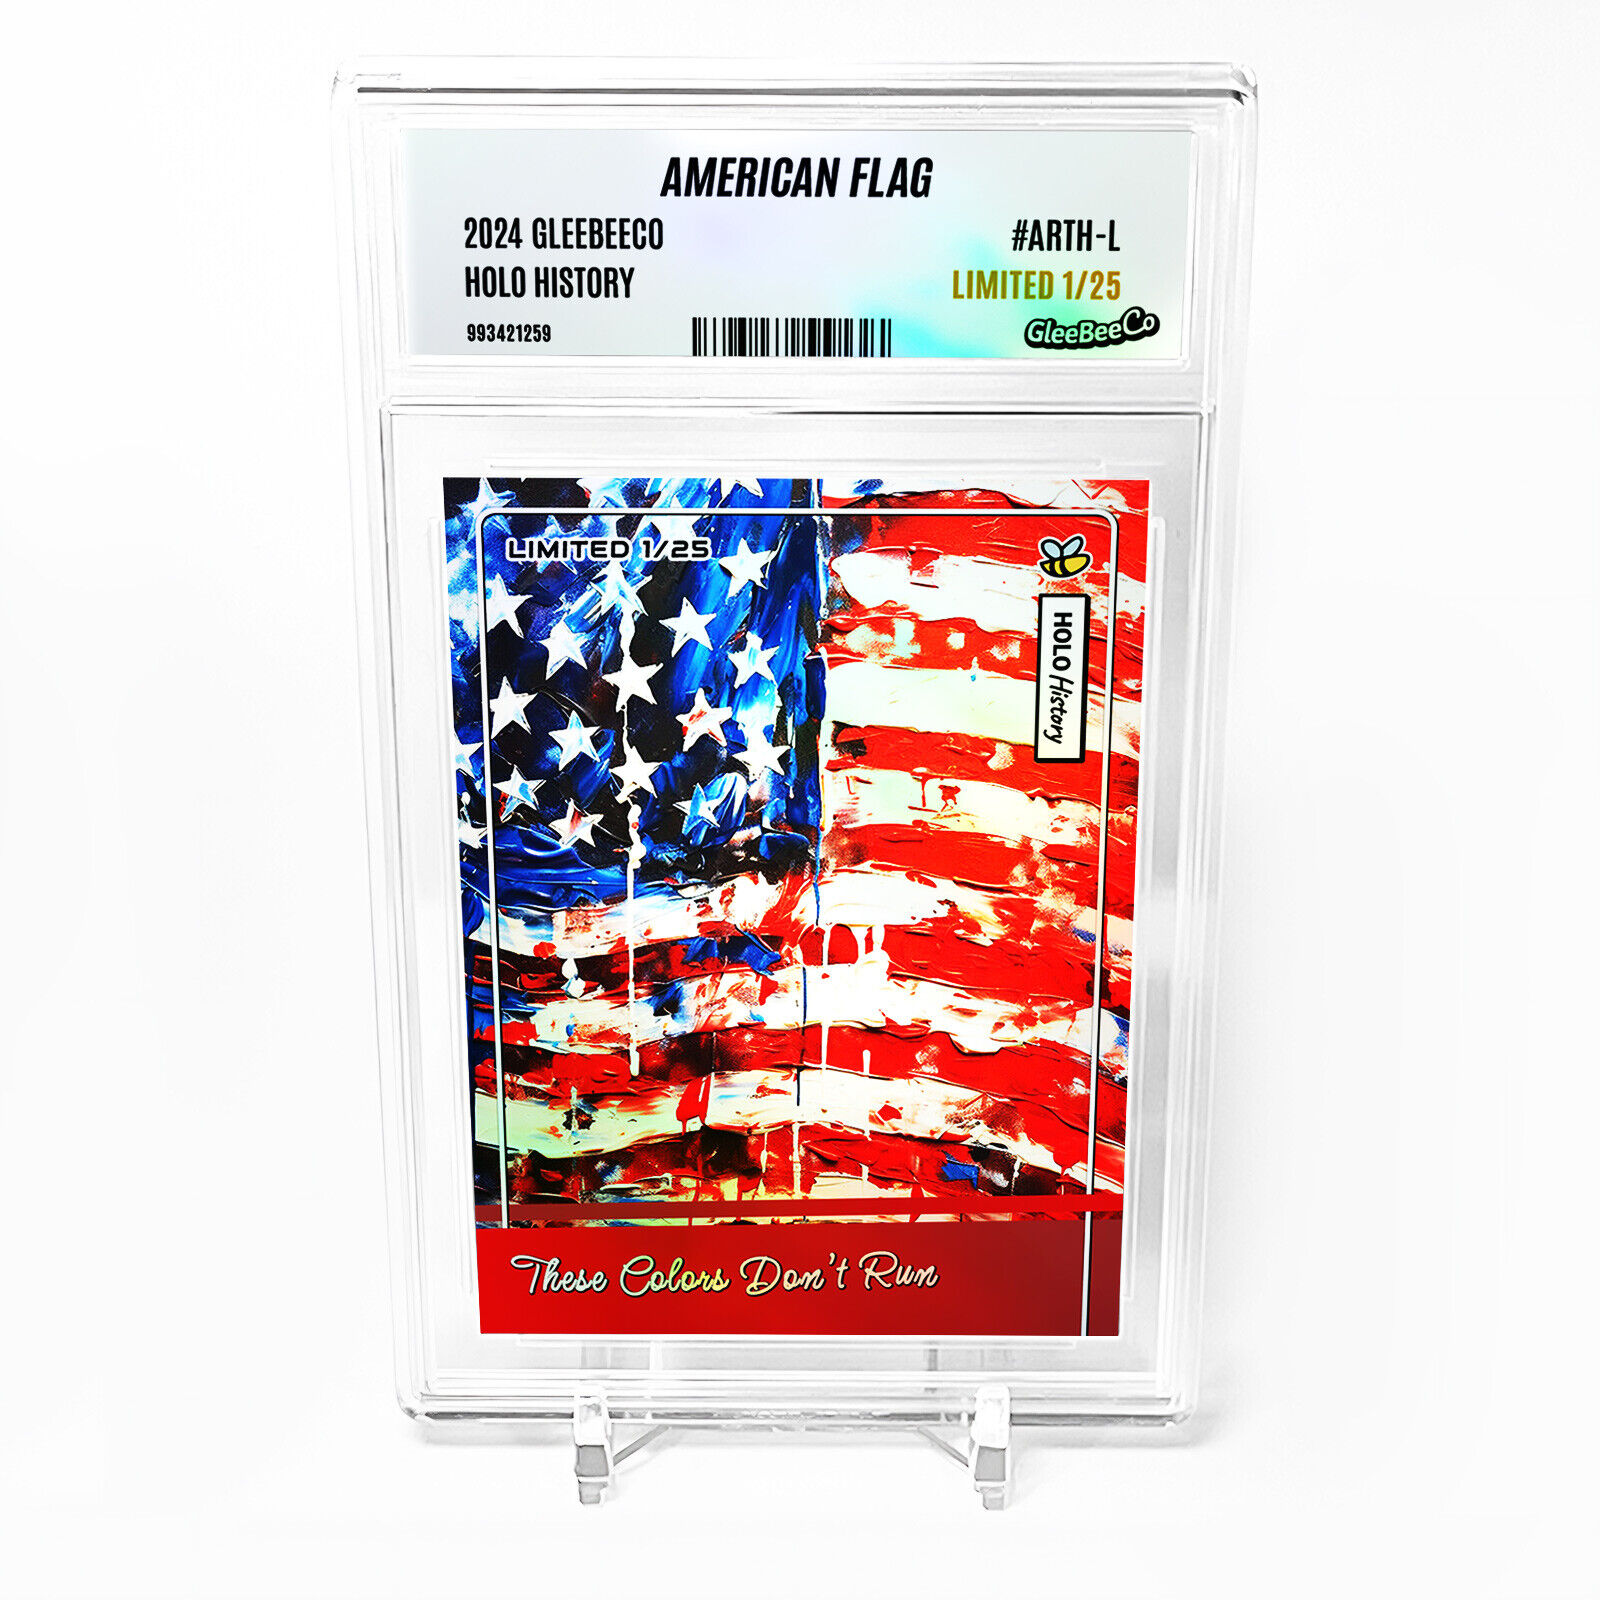 AMERICAN FLAG Card 2024 GleeBeeCo Holo History Slabbed #ARTH-L /25